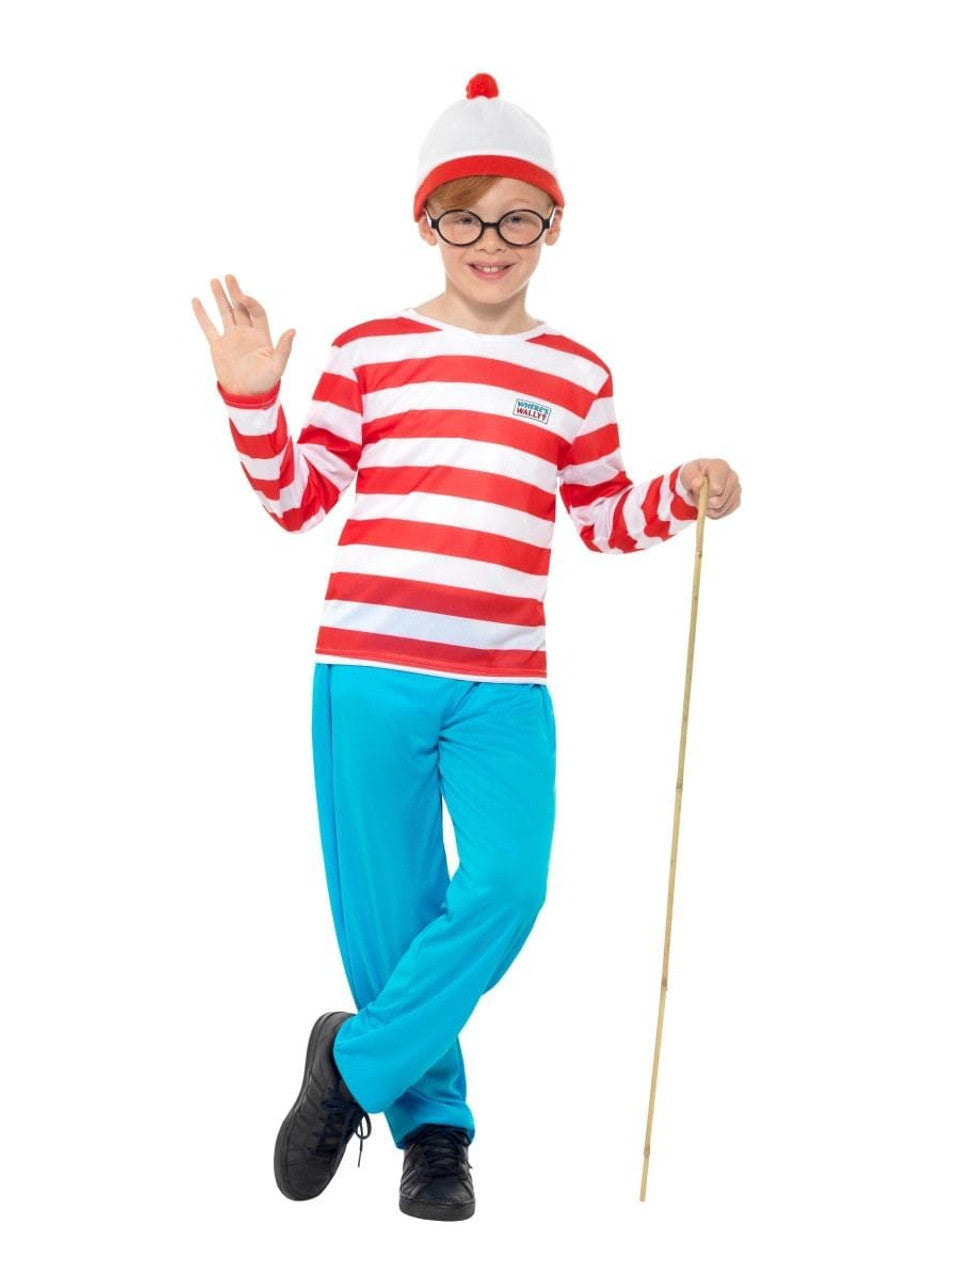 Where's Wally? Kids Costume